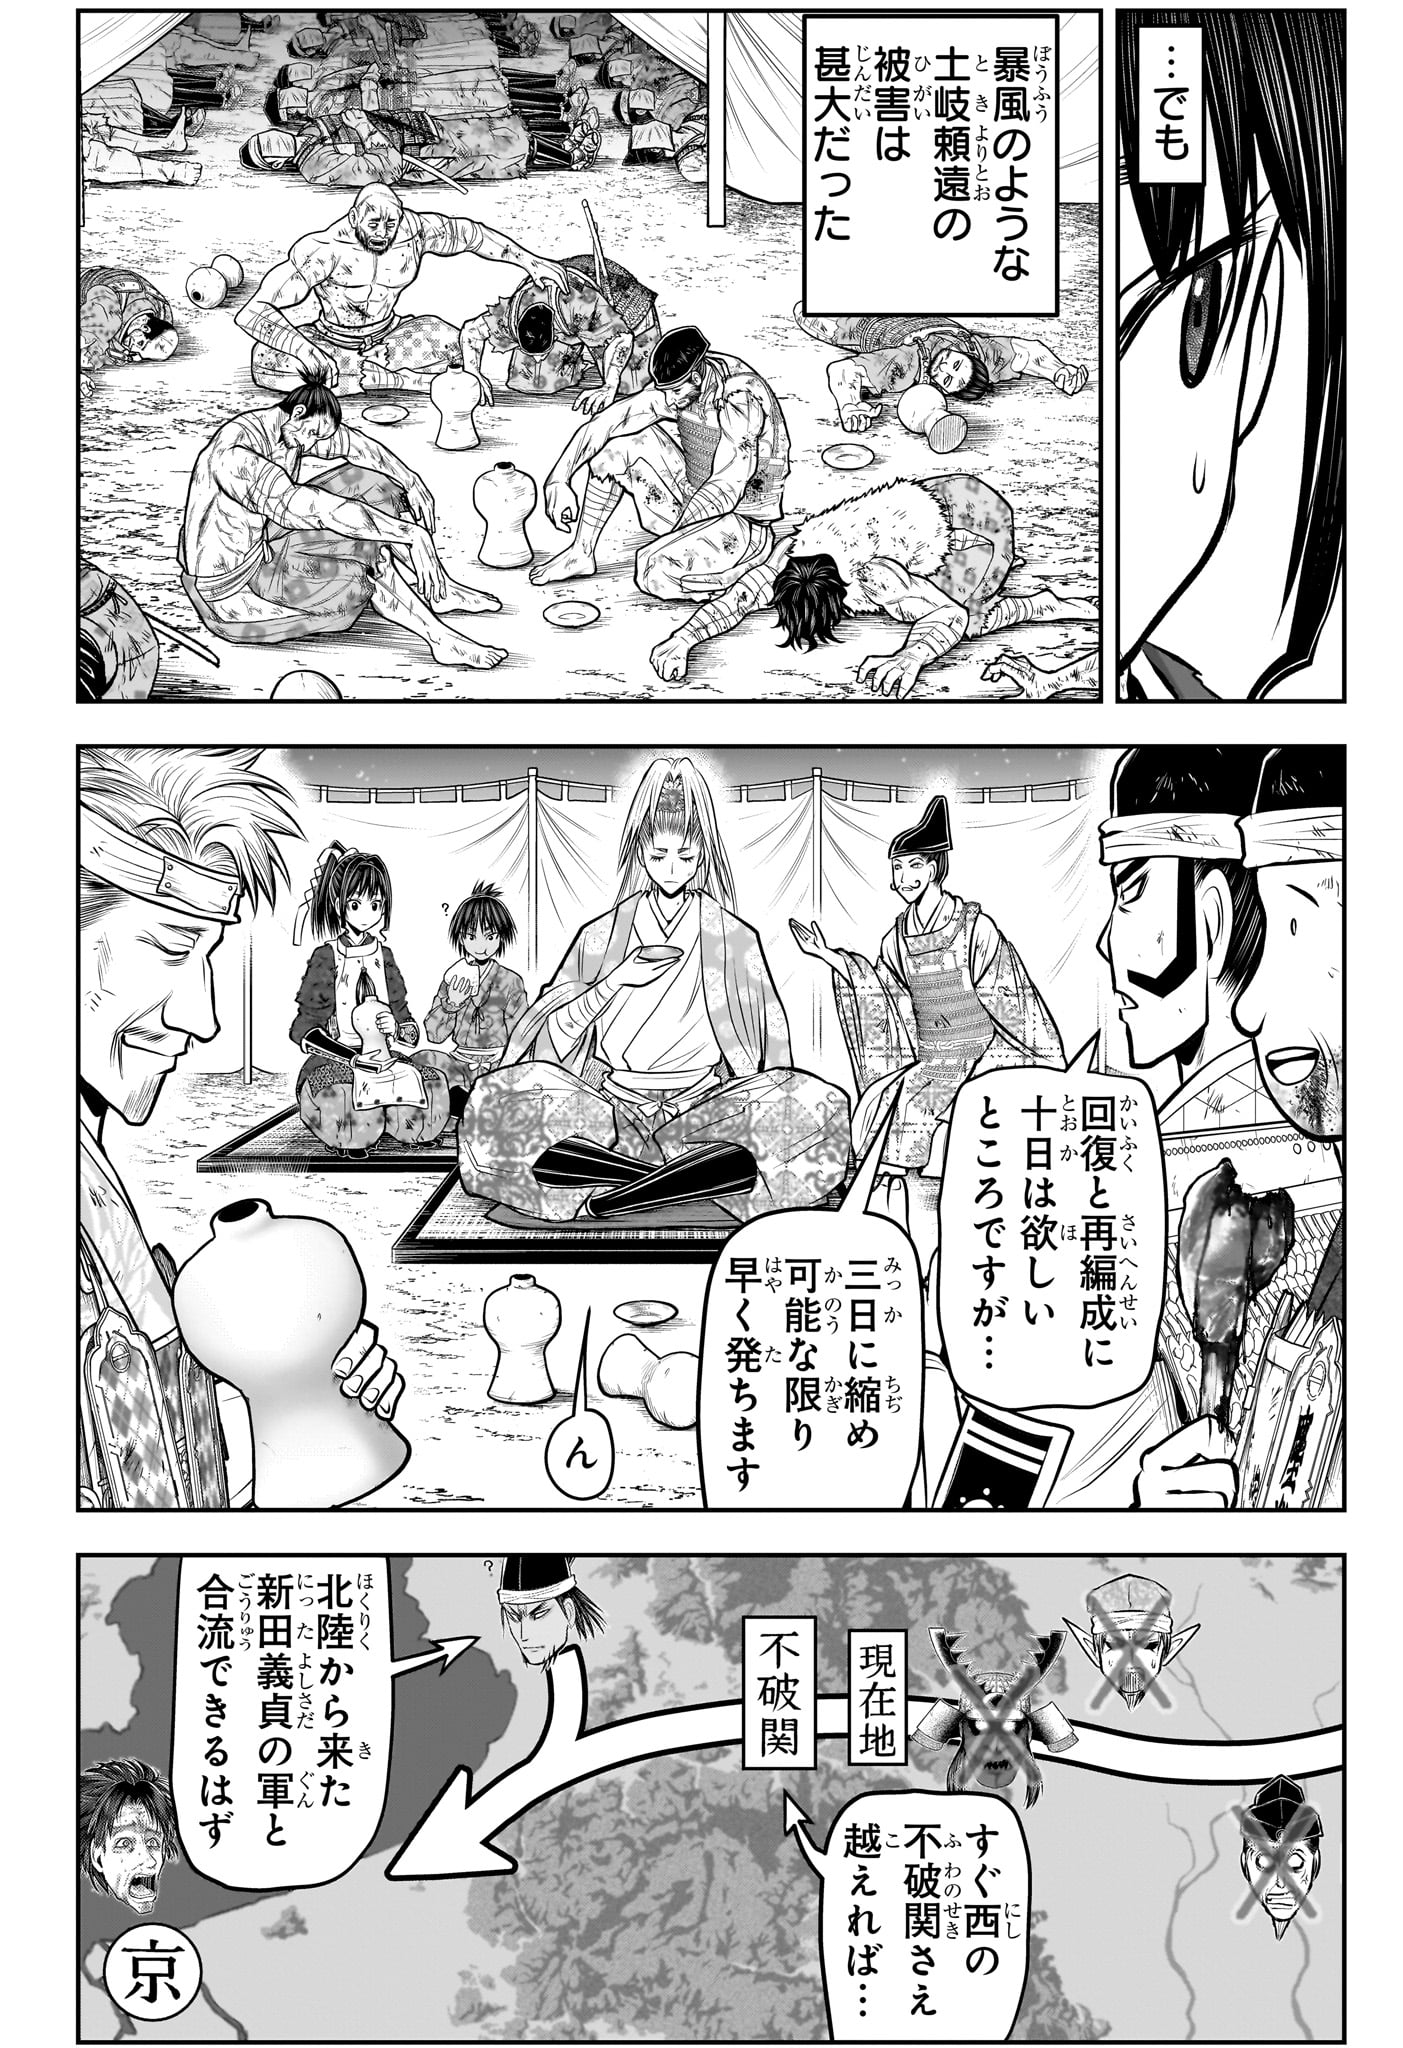 Nige Jouzu no Wakagimi - Chapter 146 - Page 2